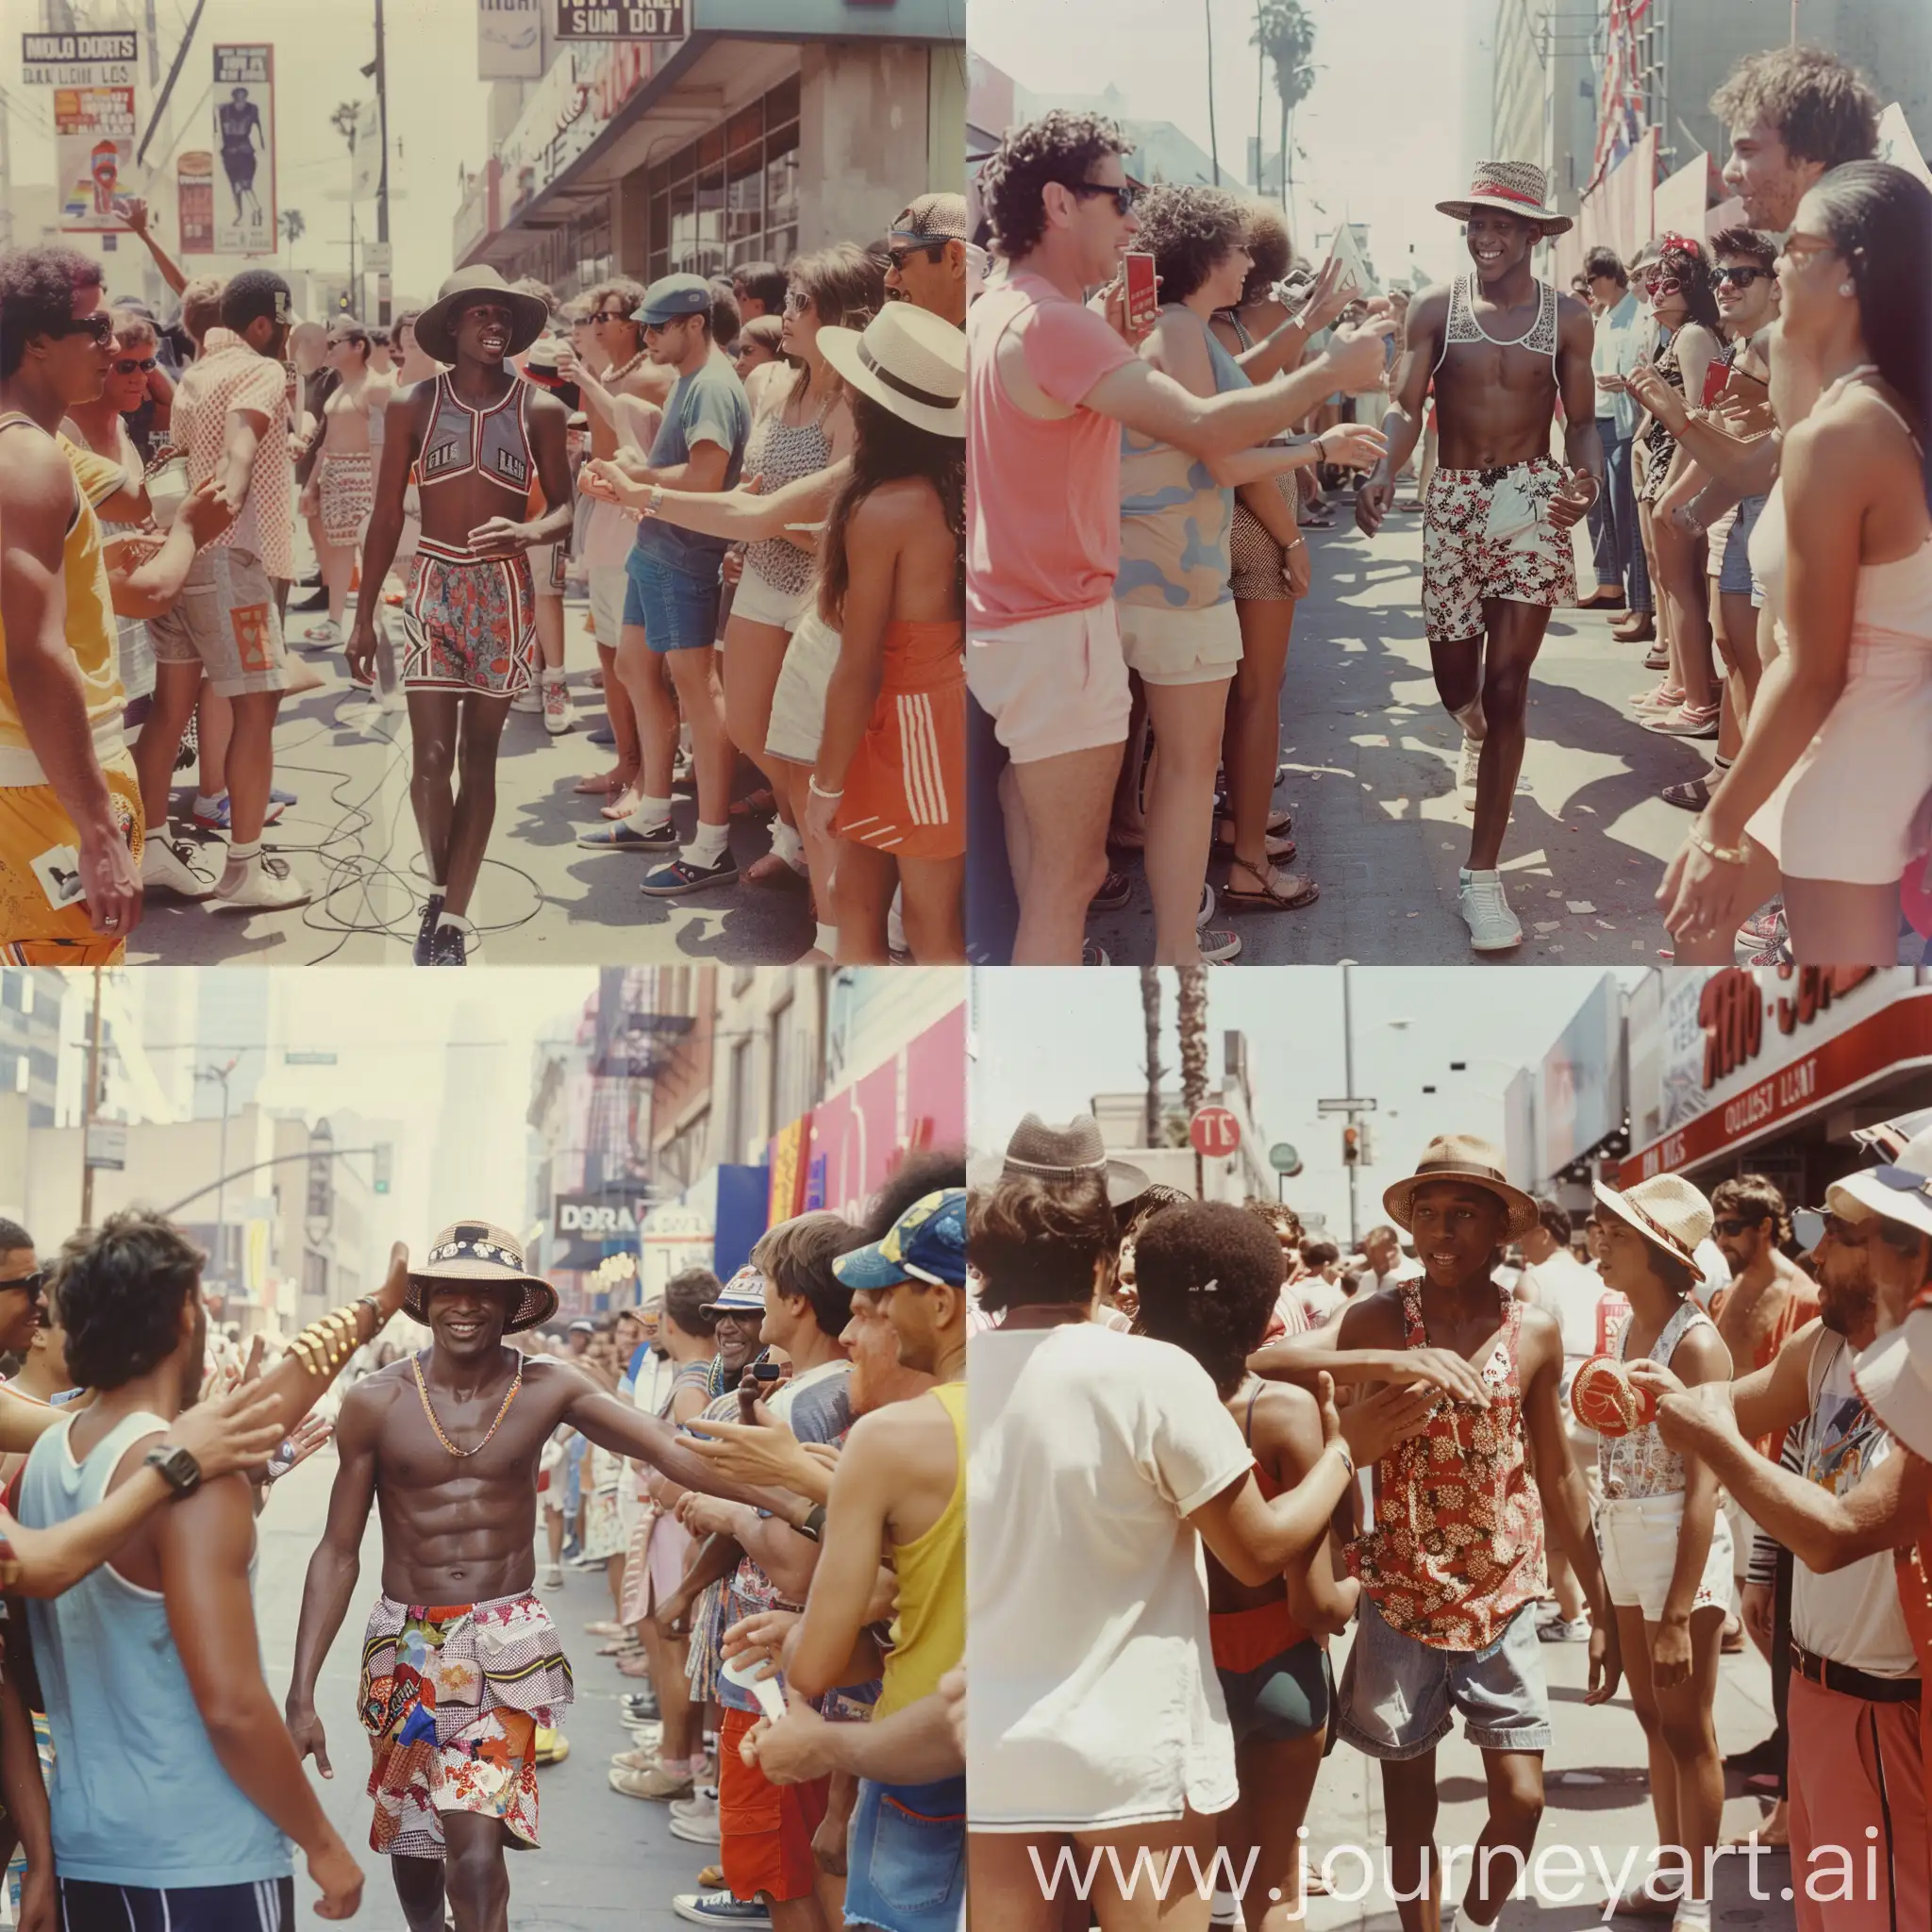 Michael-Jordan-Walking-Los-Angeles-Streets-in-1980s-Summer-Outfit